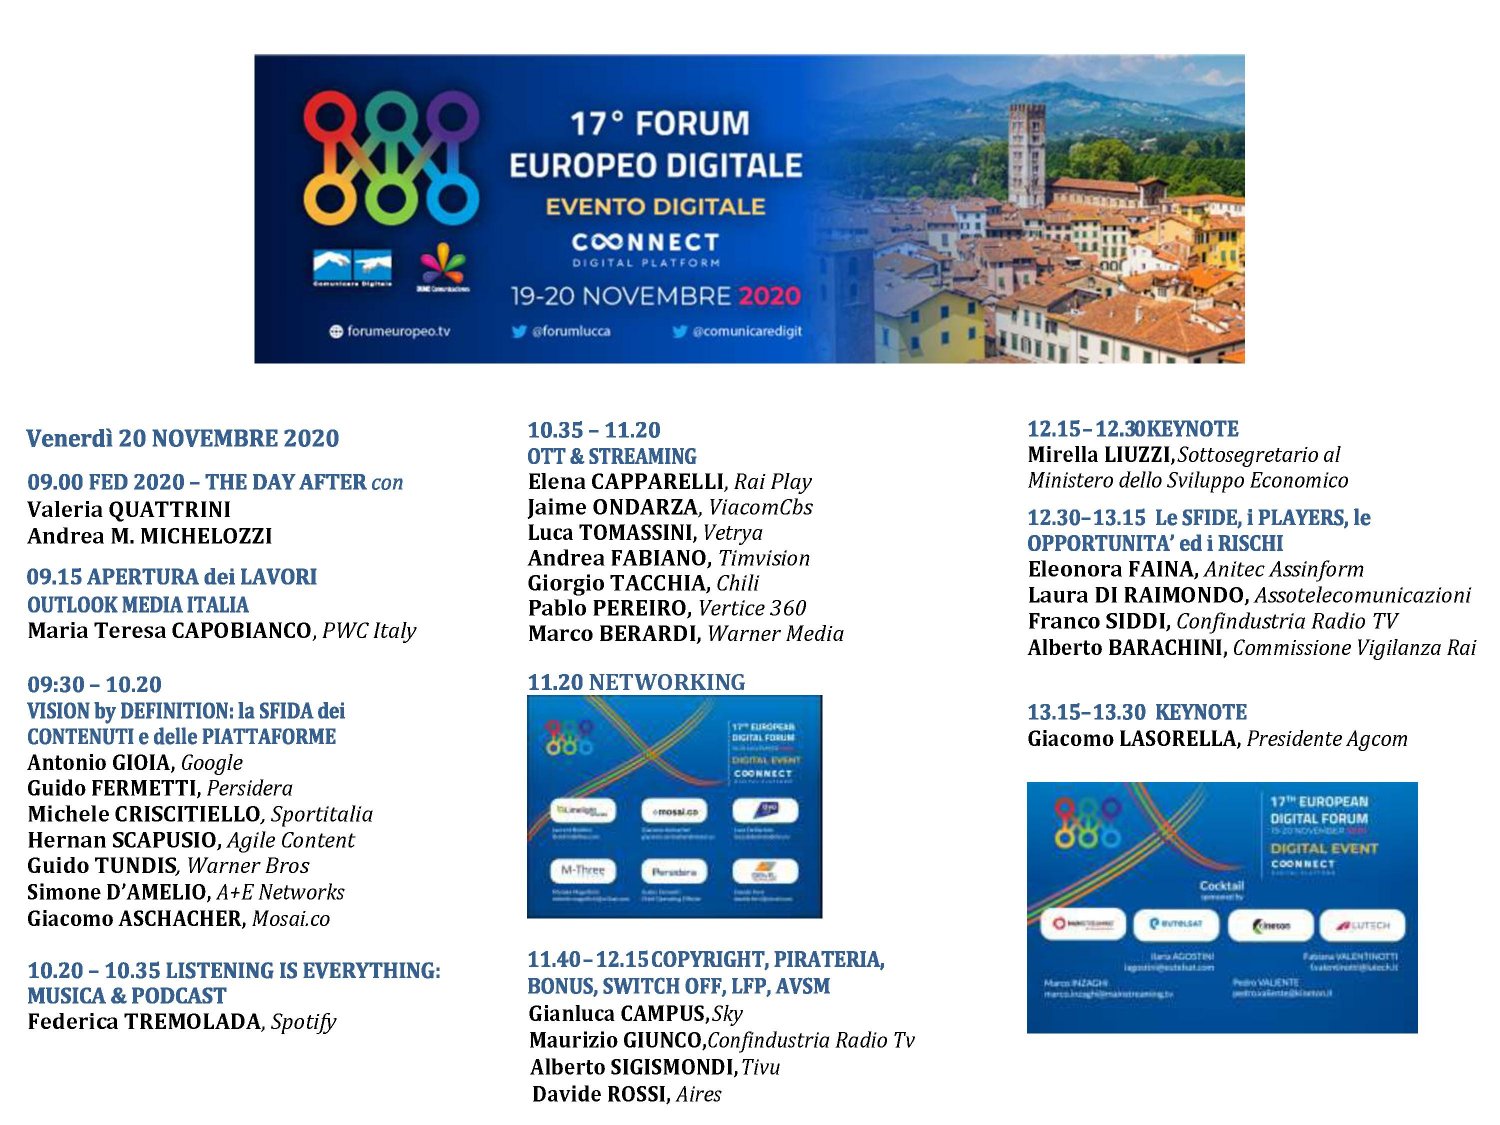 17 Forum Europeo Digitale Lucca 2020 #2 diretta streaming Digital-News.it